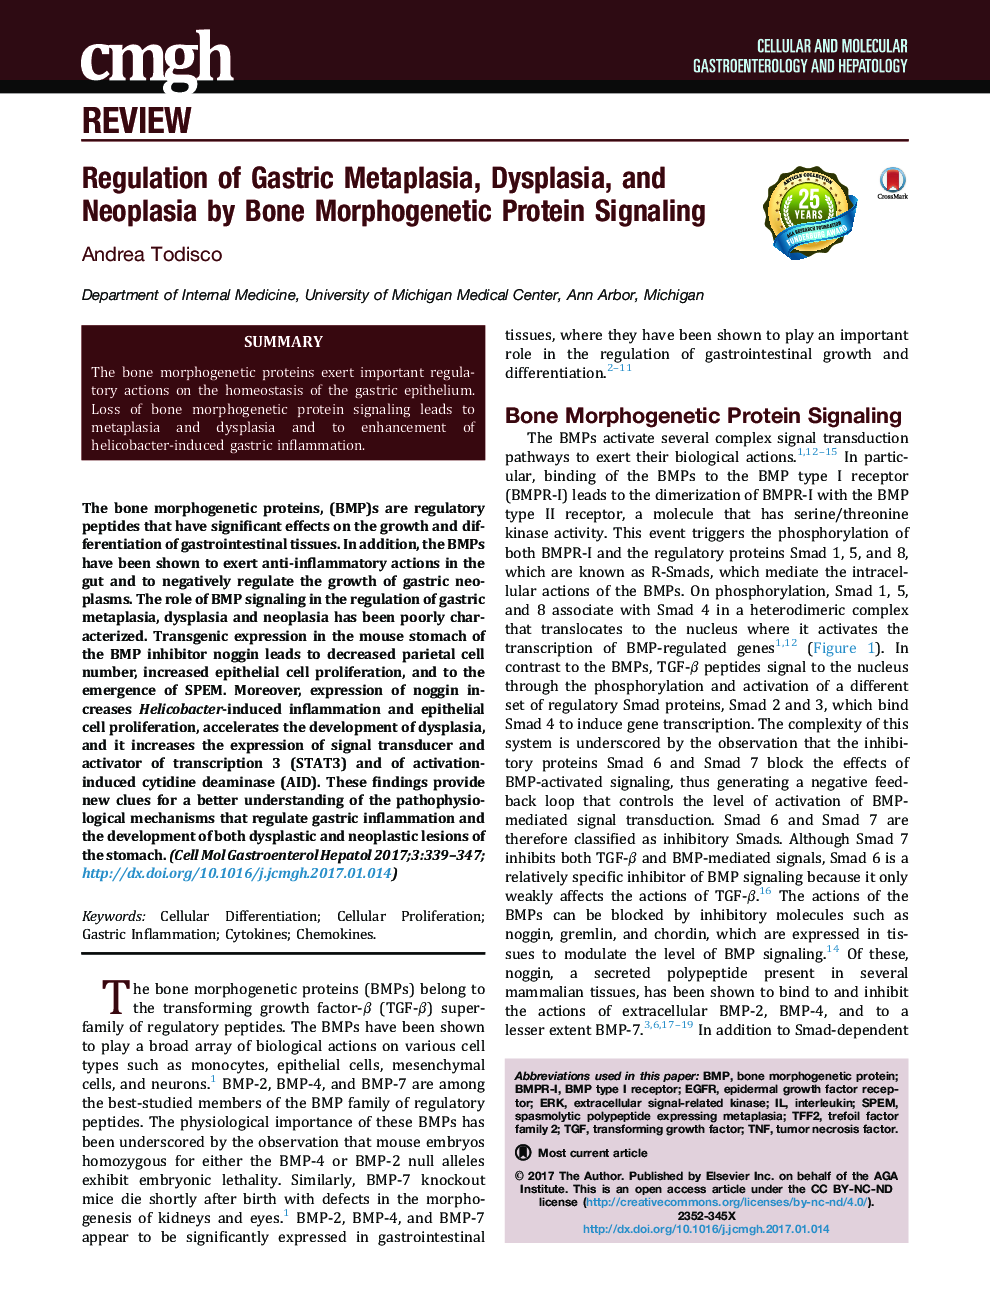 Regulation of Gastric Metaplasia, Dysplasia, and Neoplasia by Bone Morphogenetic Protein Signaling